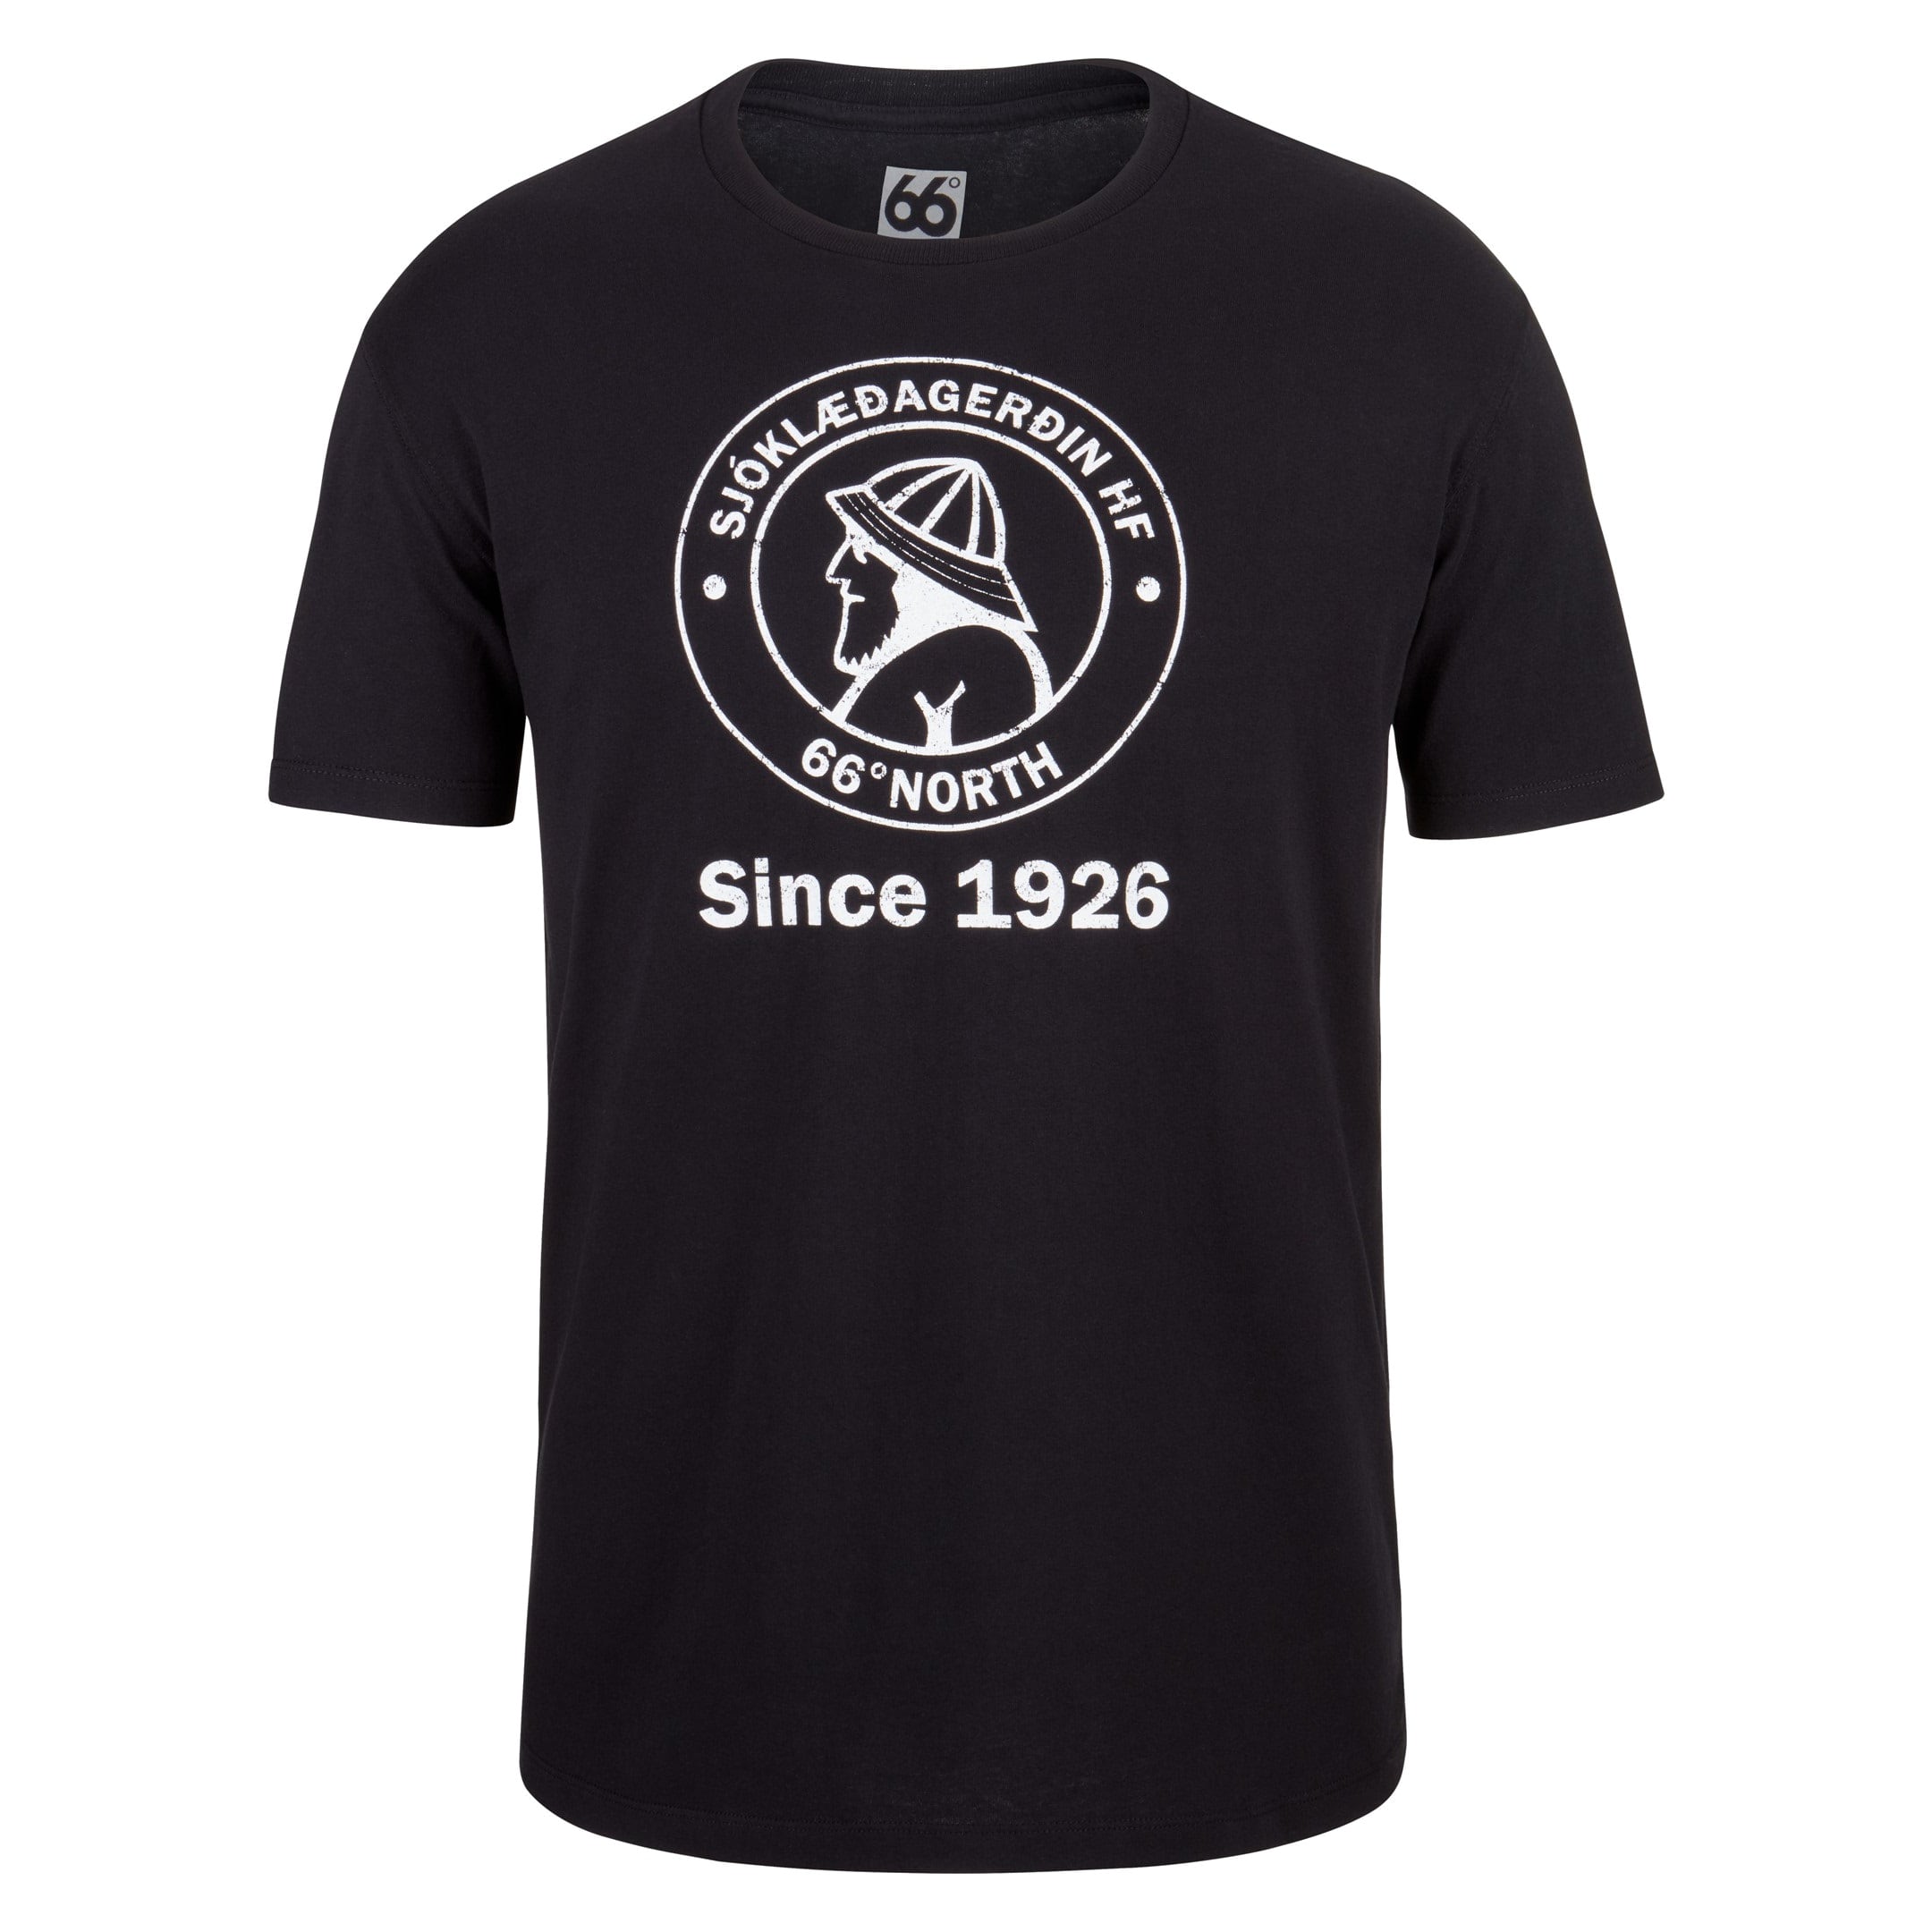 Buy 66 North Men's Logn Sailor T-shirt 